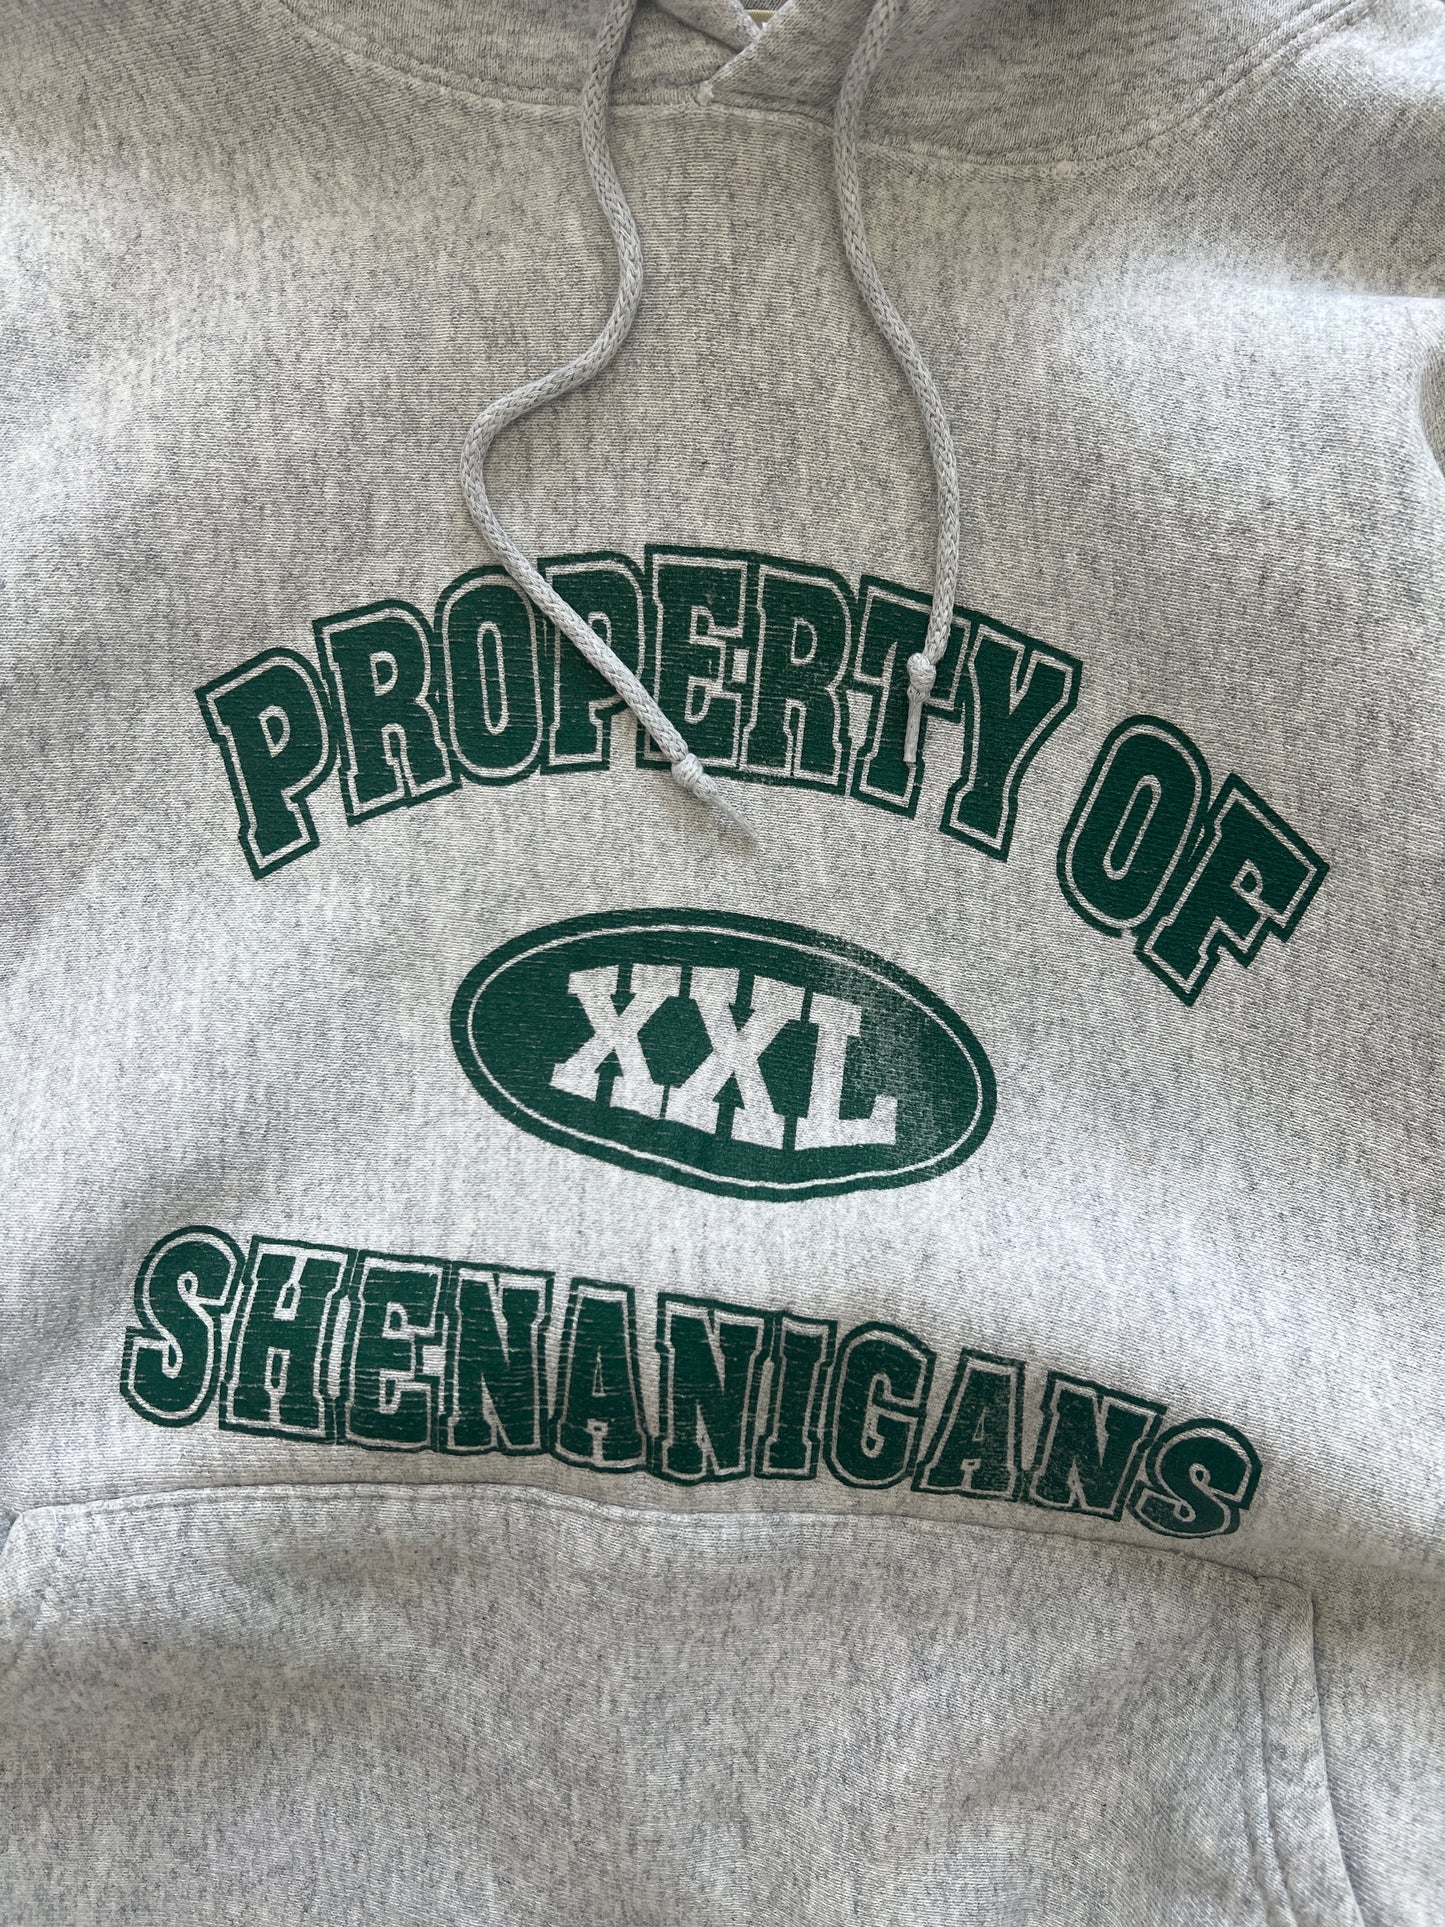 Vintage Shenanigans Hoodie - XL